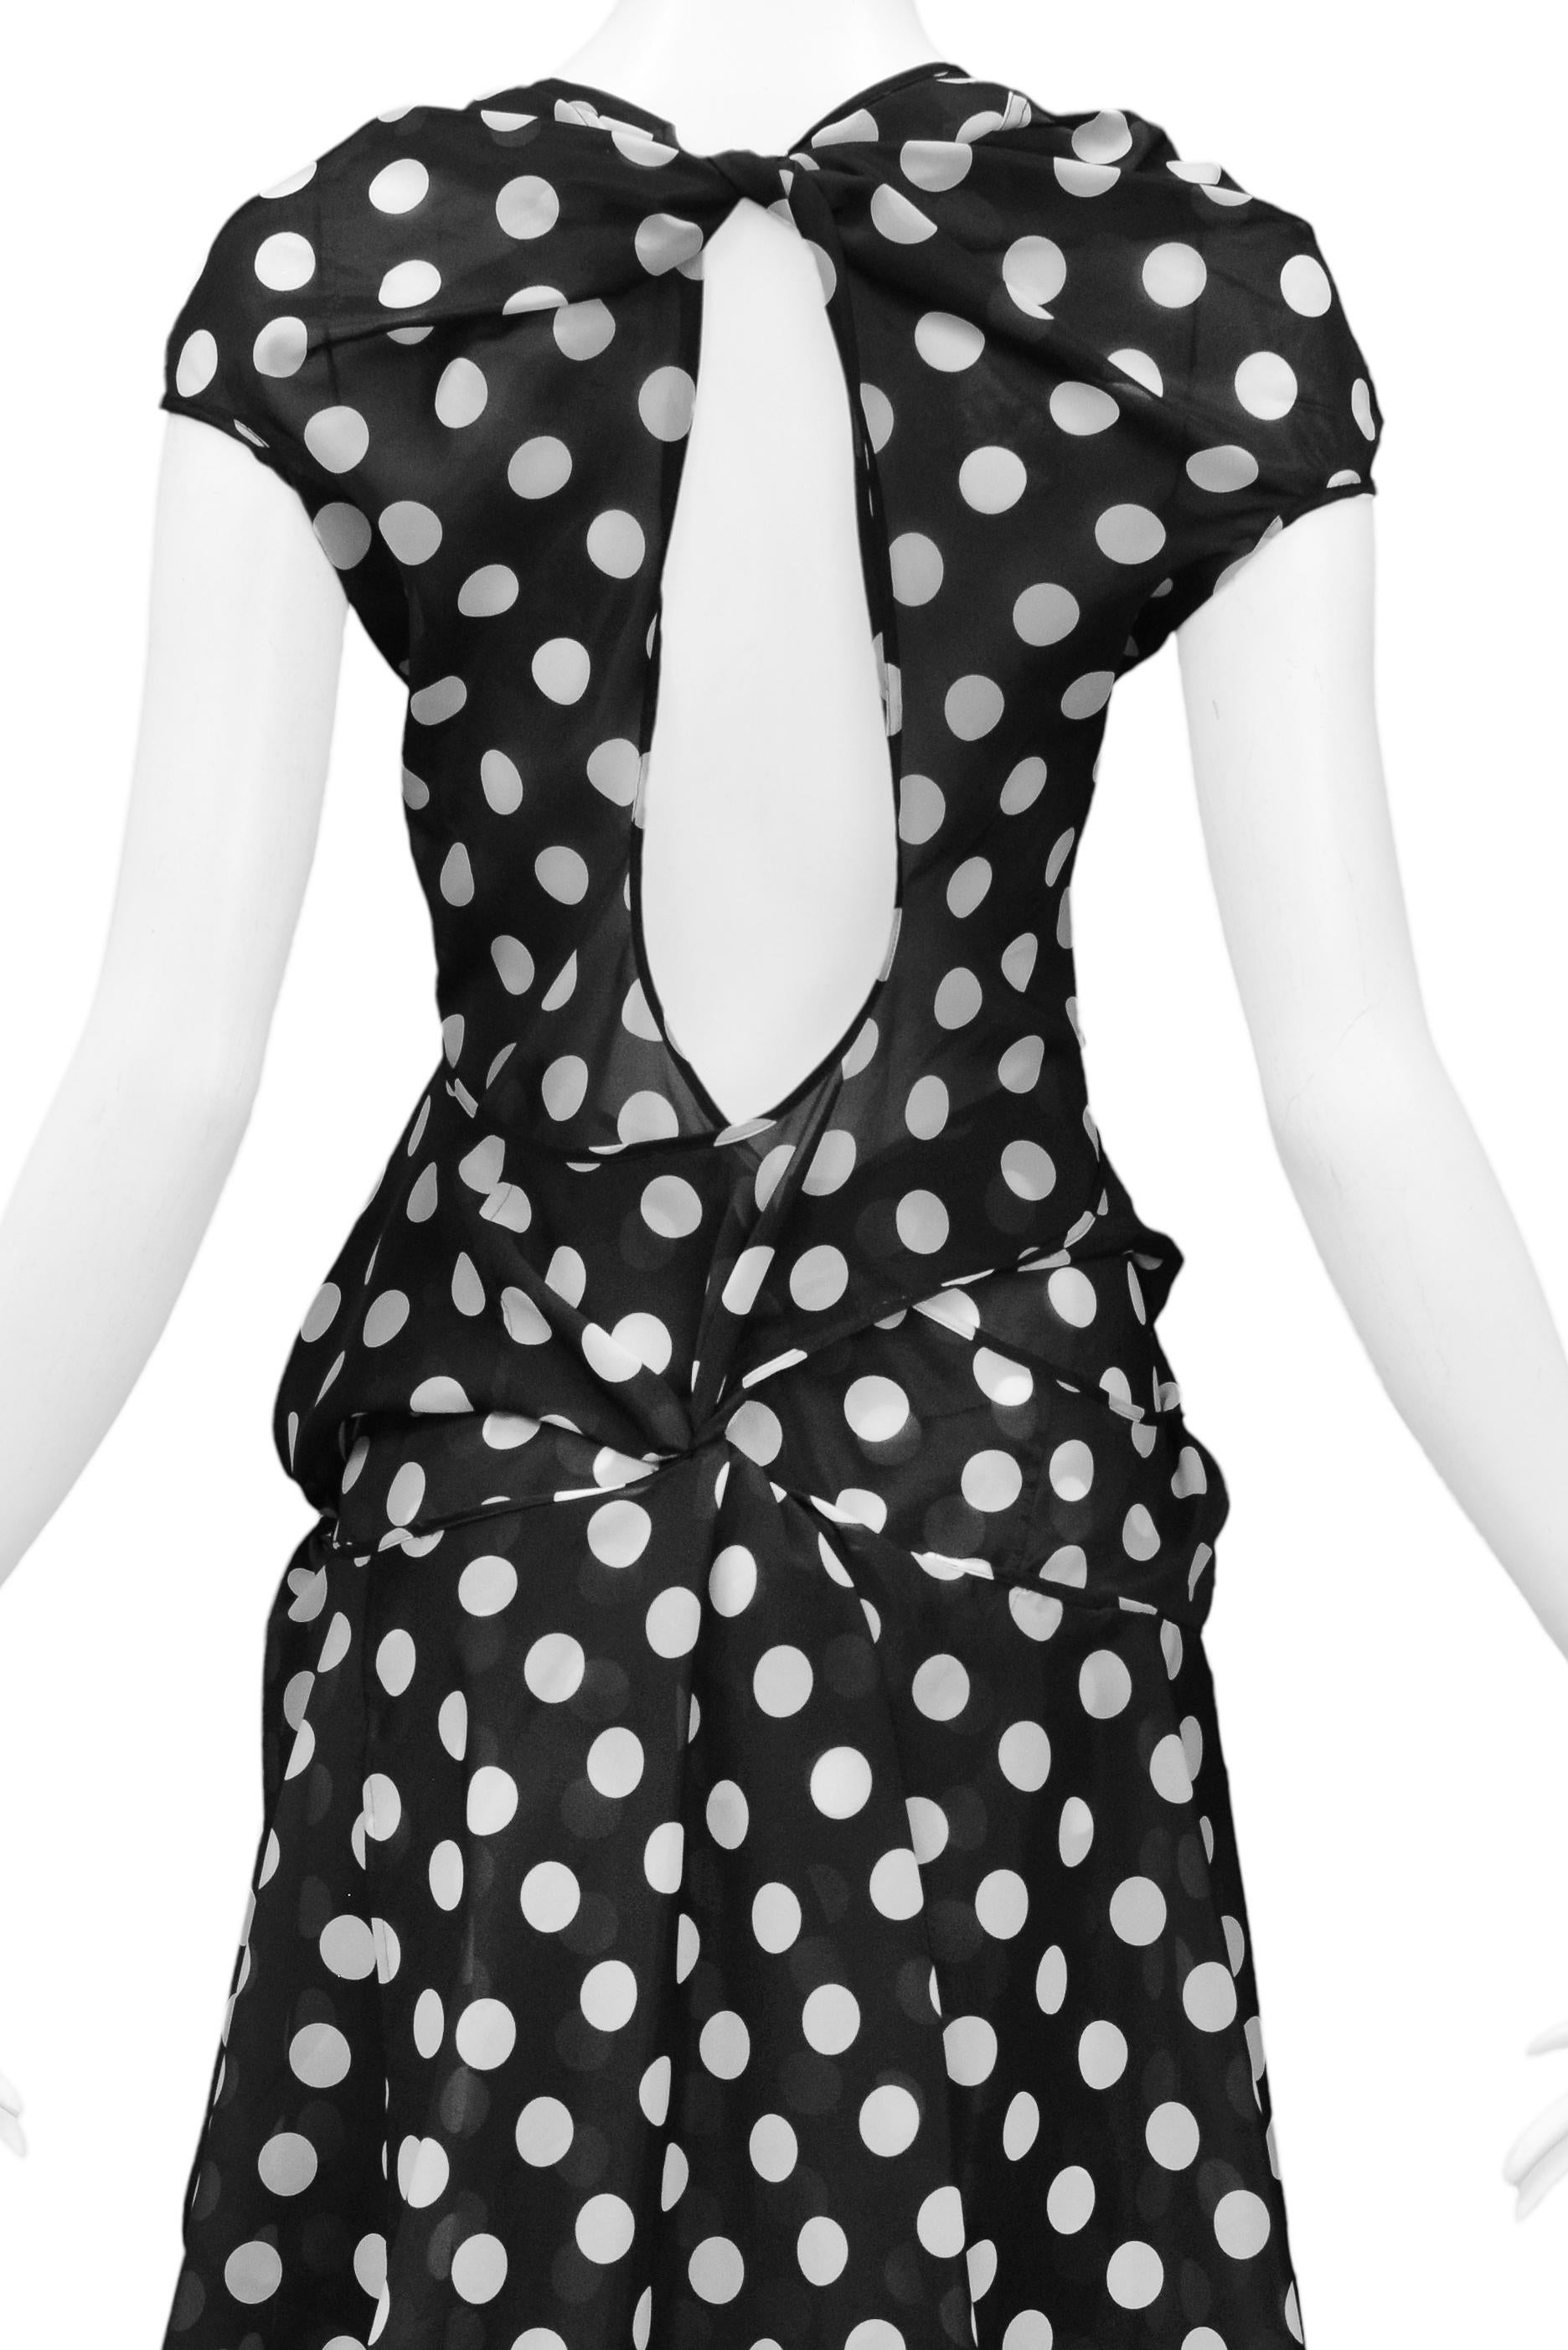 Junya Watanabe Black & White Polka Dot Concept Dress 2004 For Sale 4